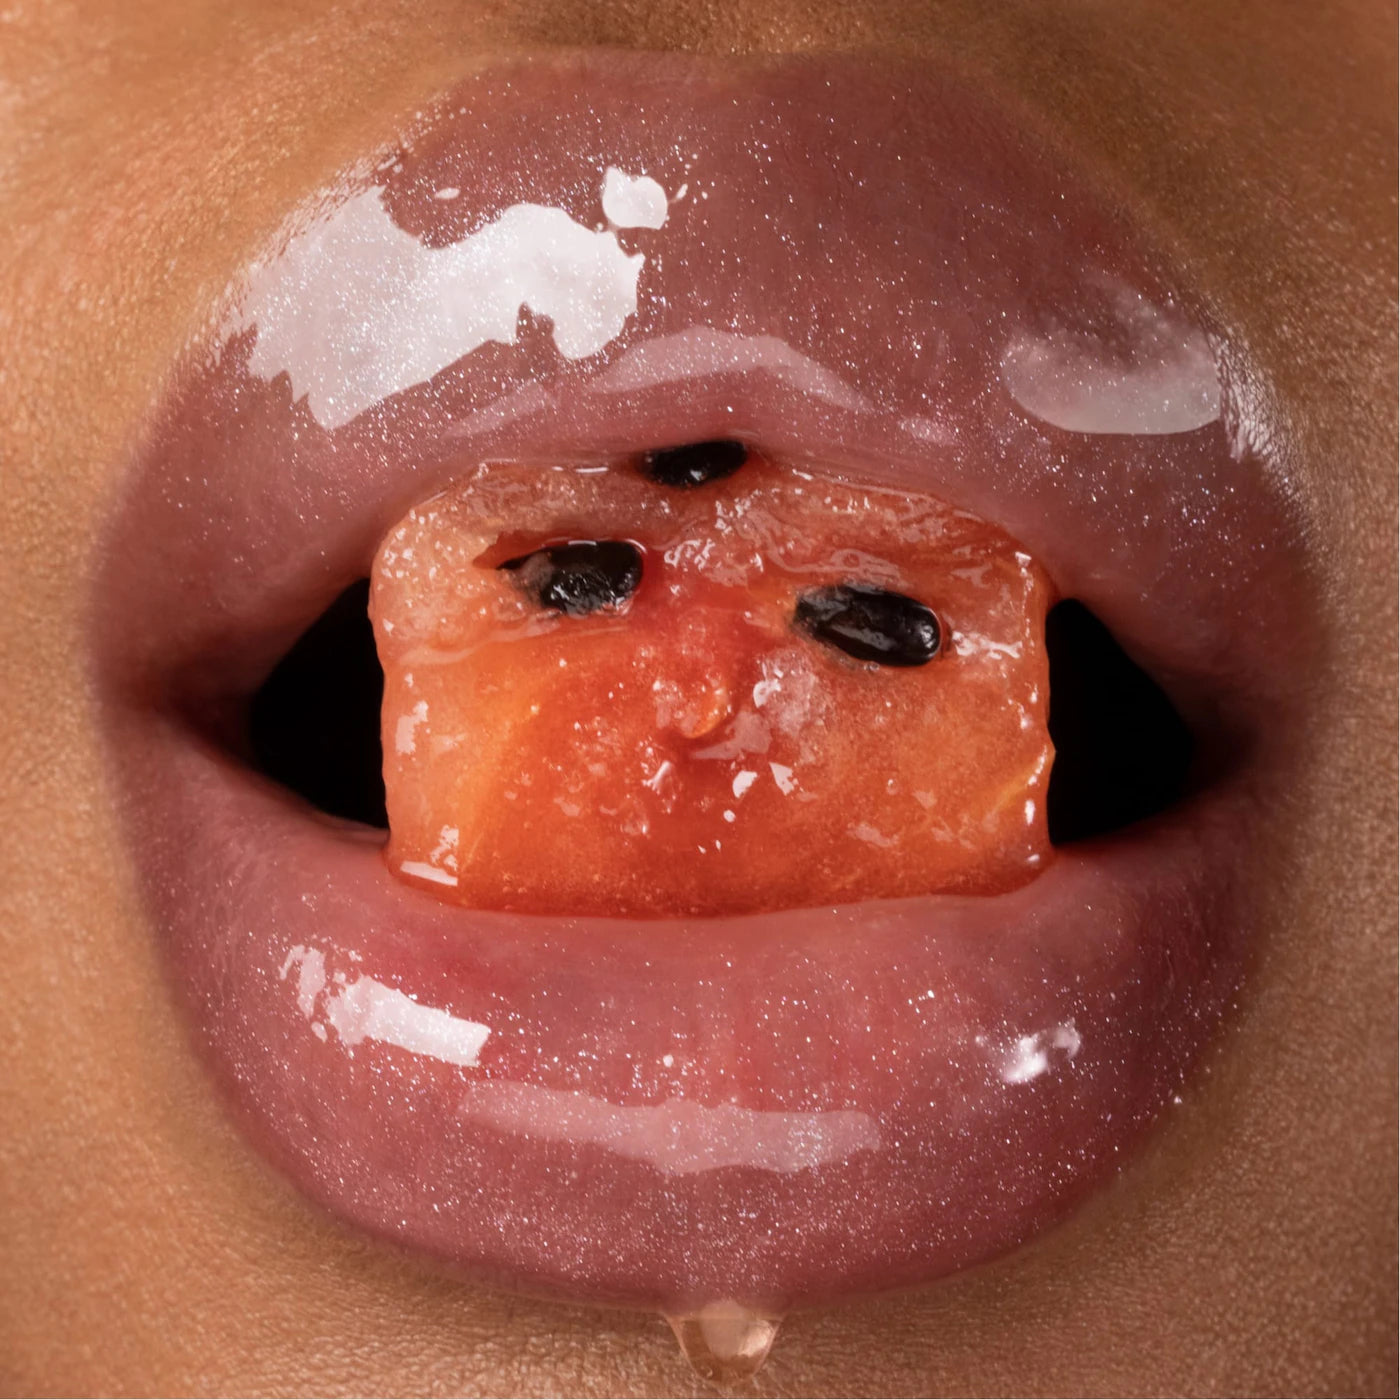 Sephora Sale: Gisou | Honey Infused Hydrating Lip Oil | Watermelon Sugar